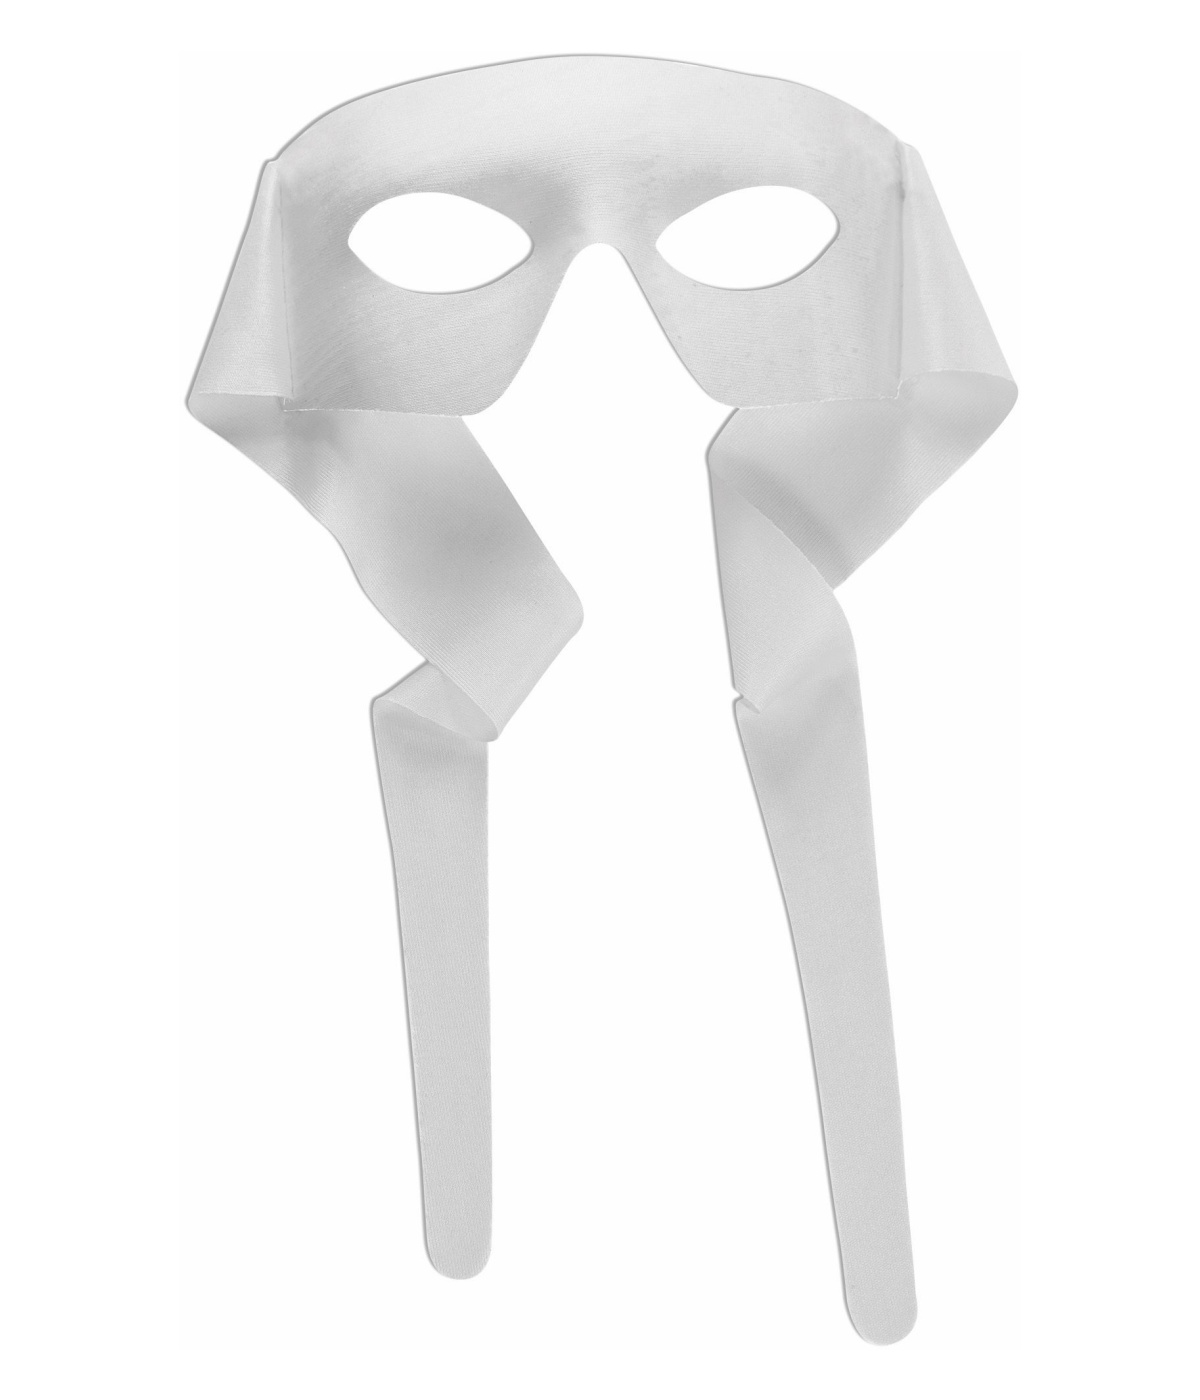  Mens Masquerade Tie Mask